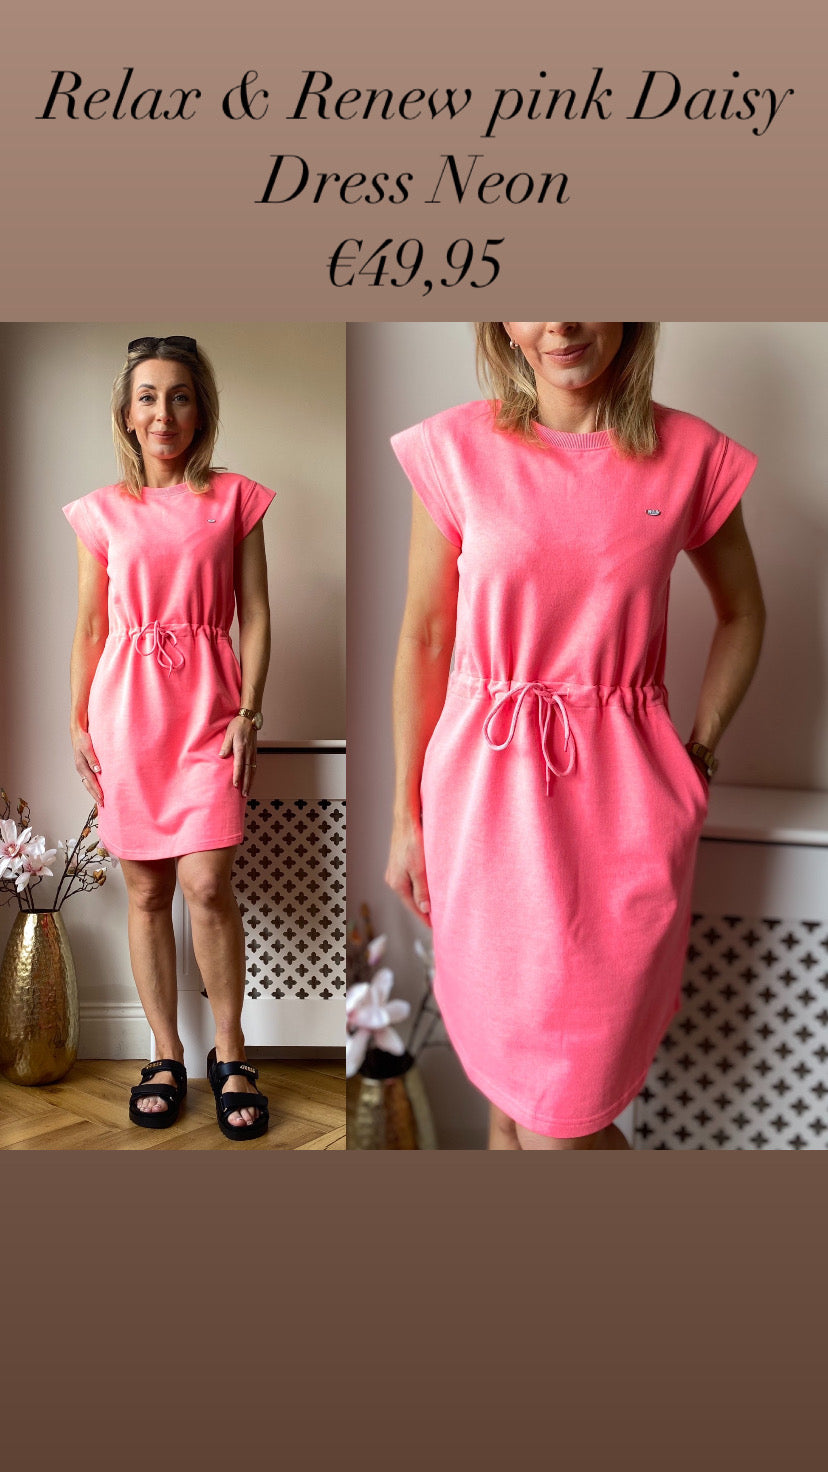 Relax & Renew pink Daisy
Dress Neon